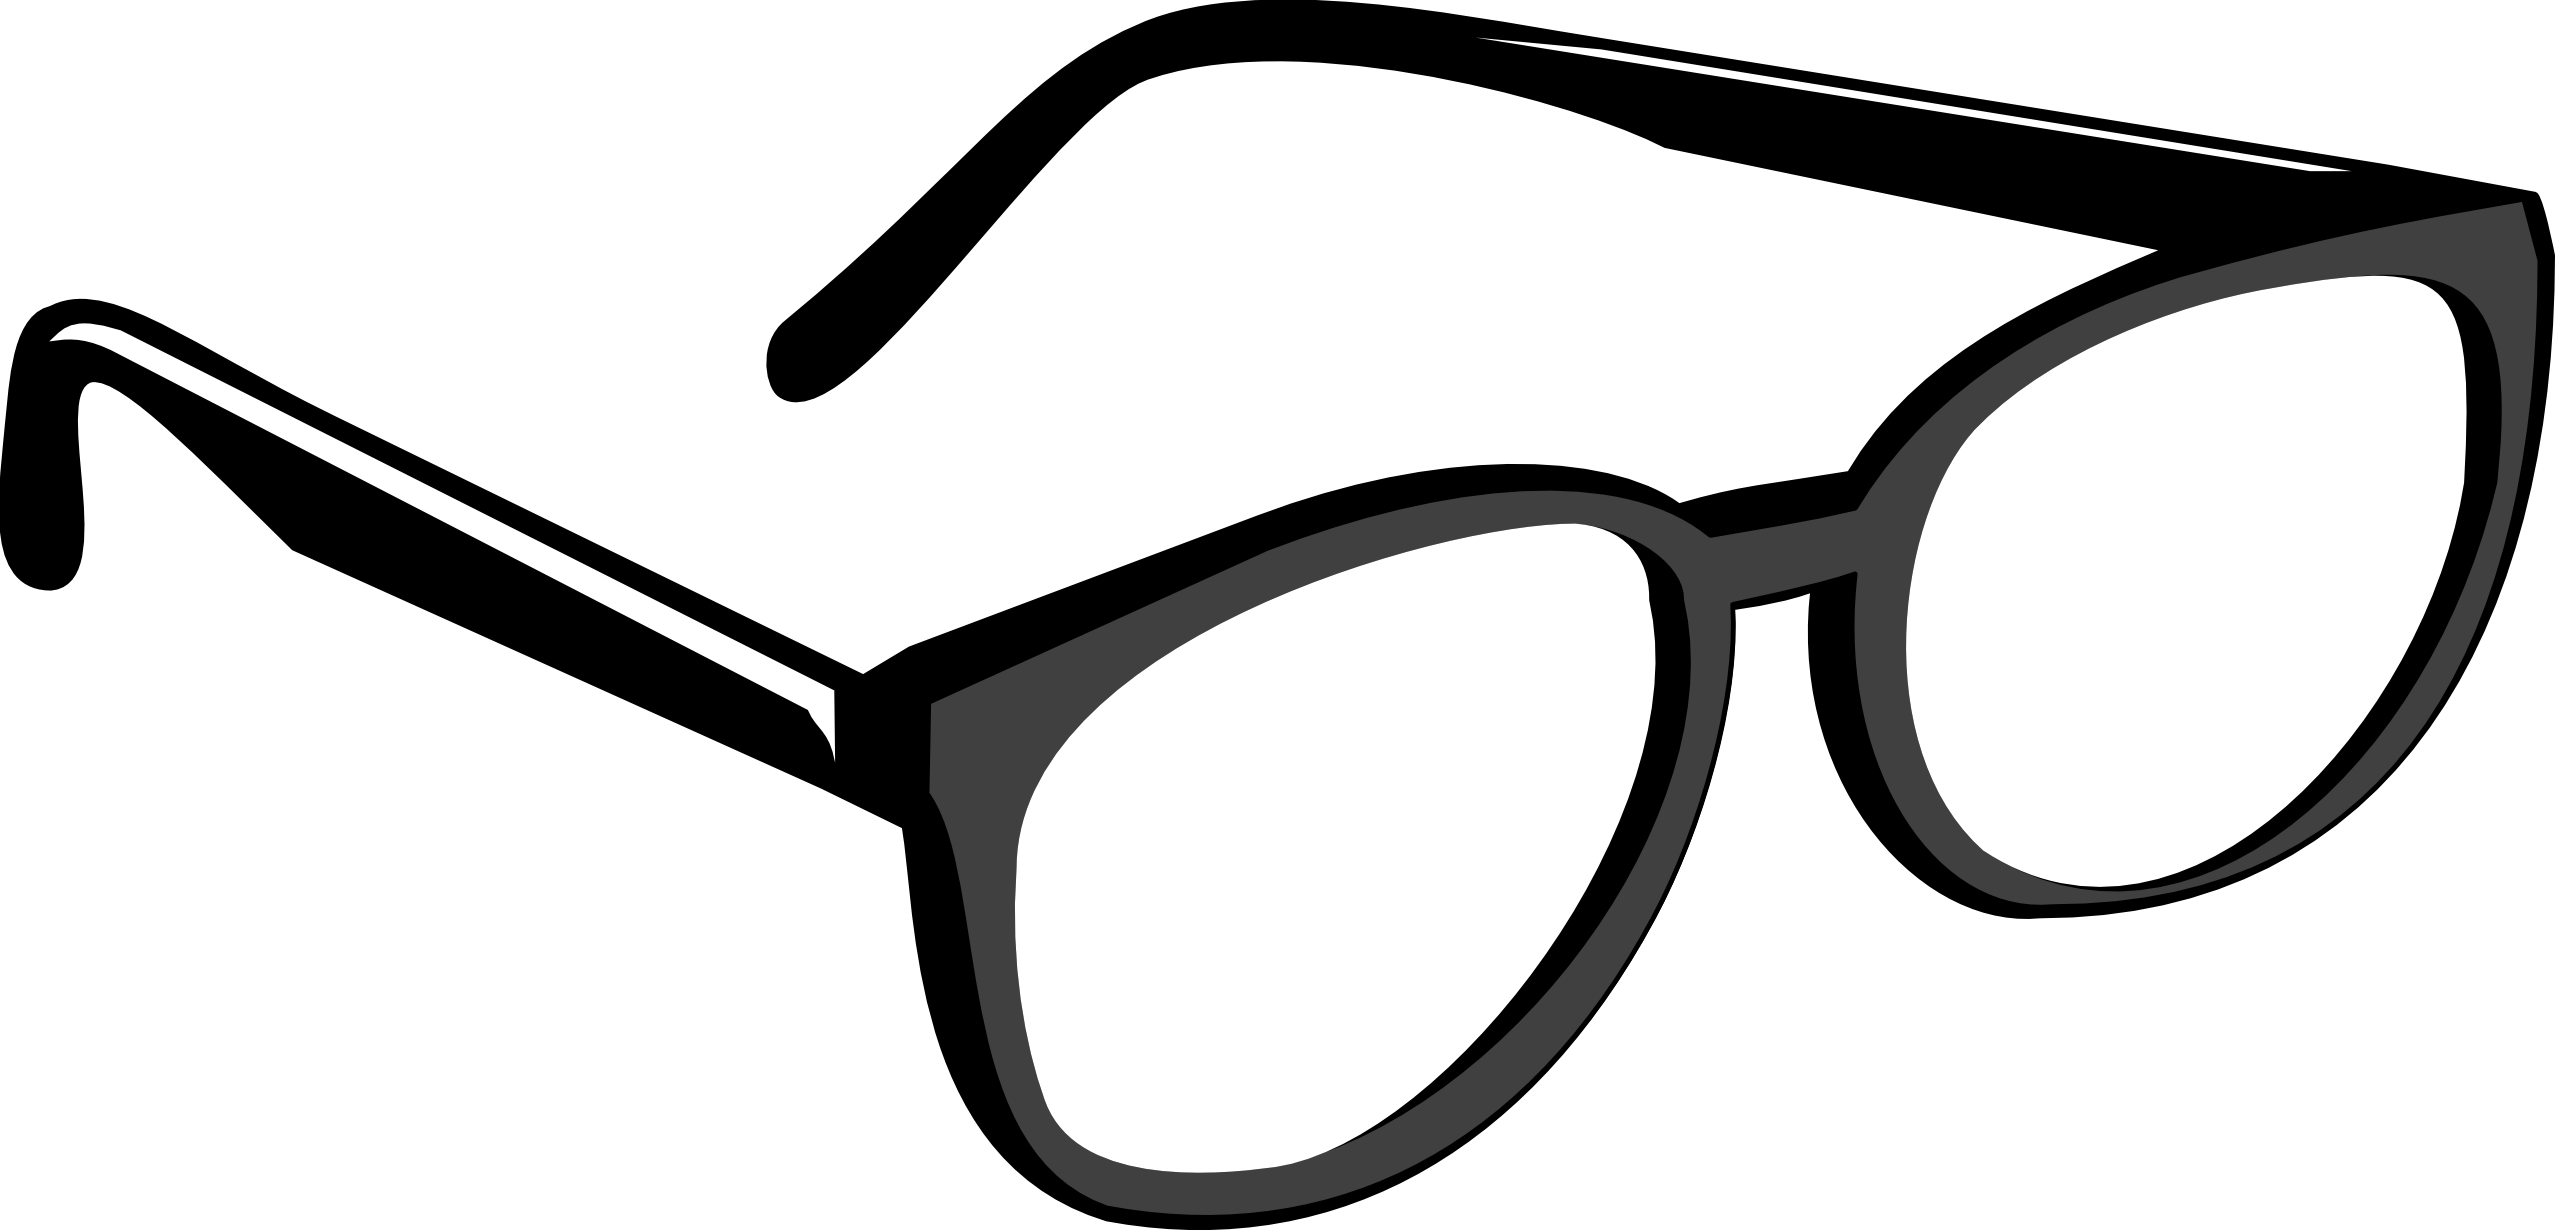 Sunglasses clipart free clip art image 6